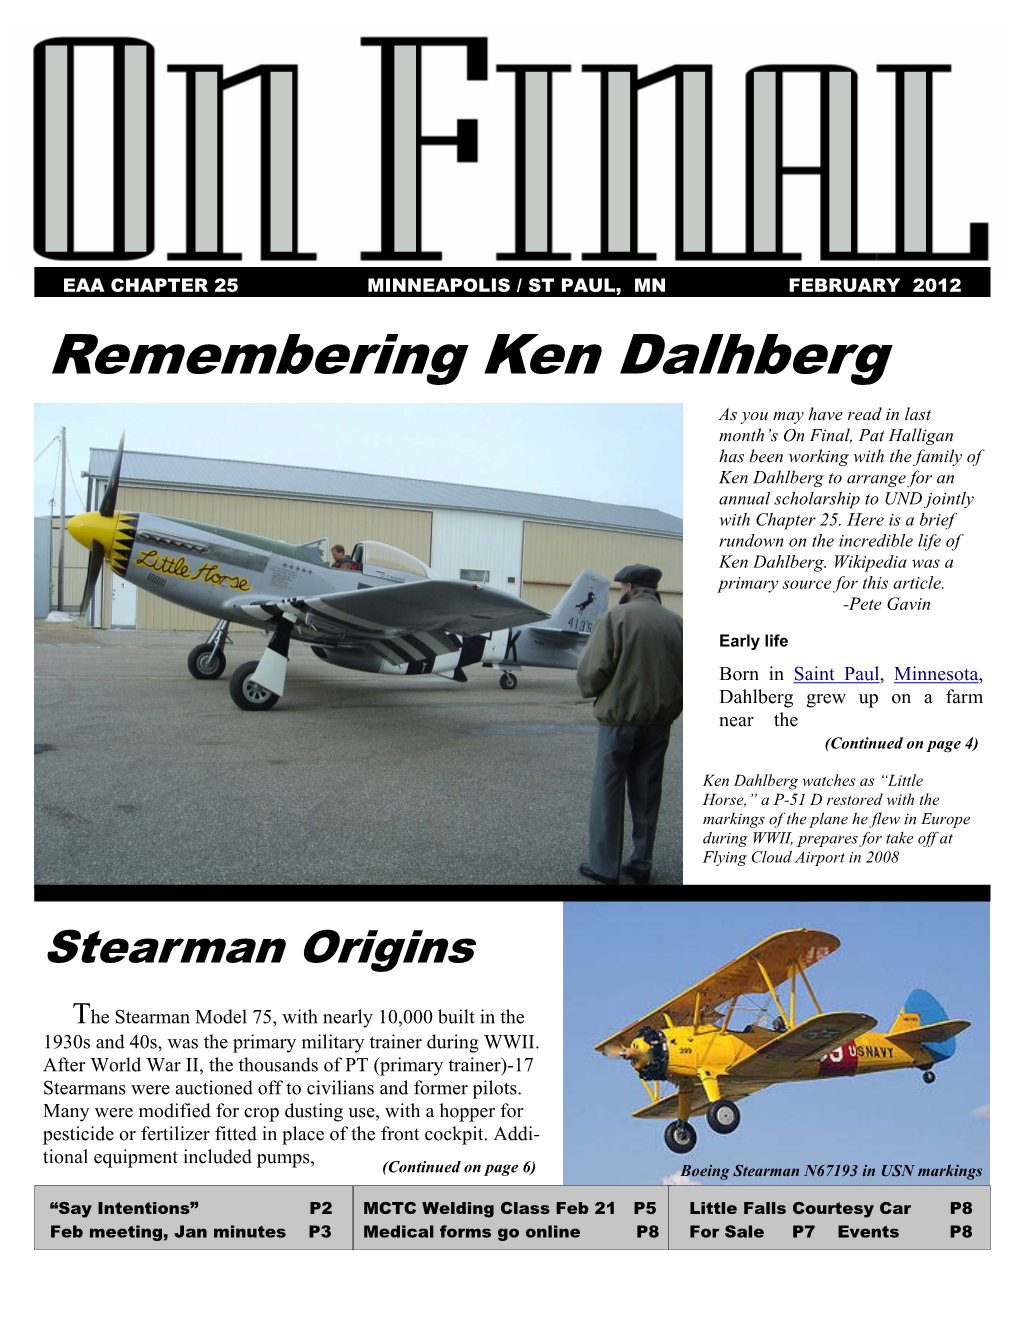 Remembering Ken Dalhberg